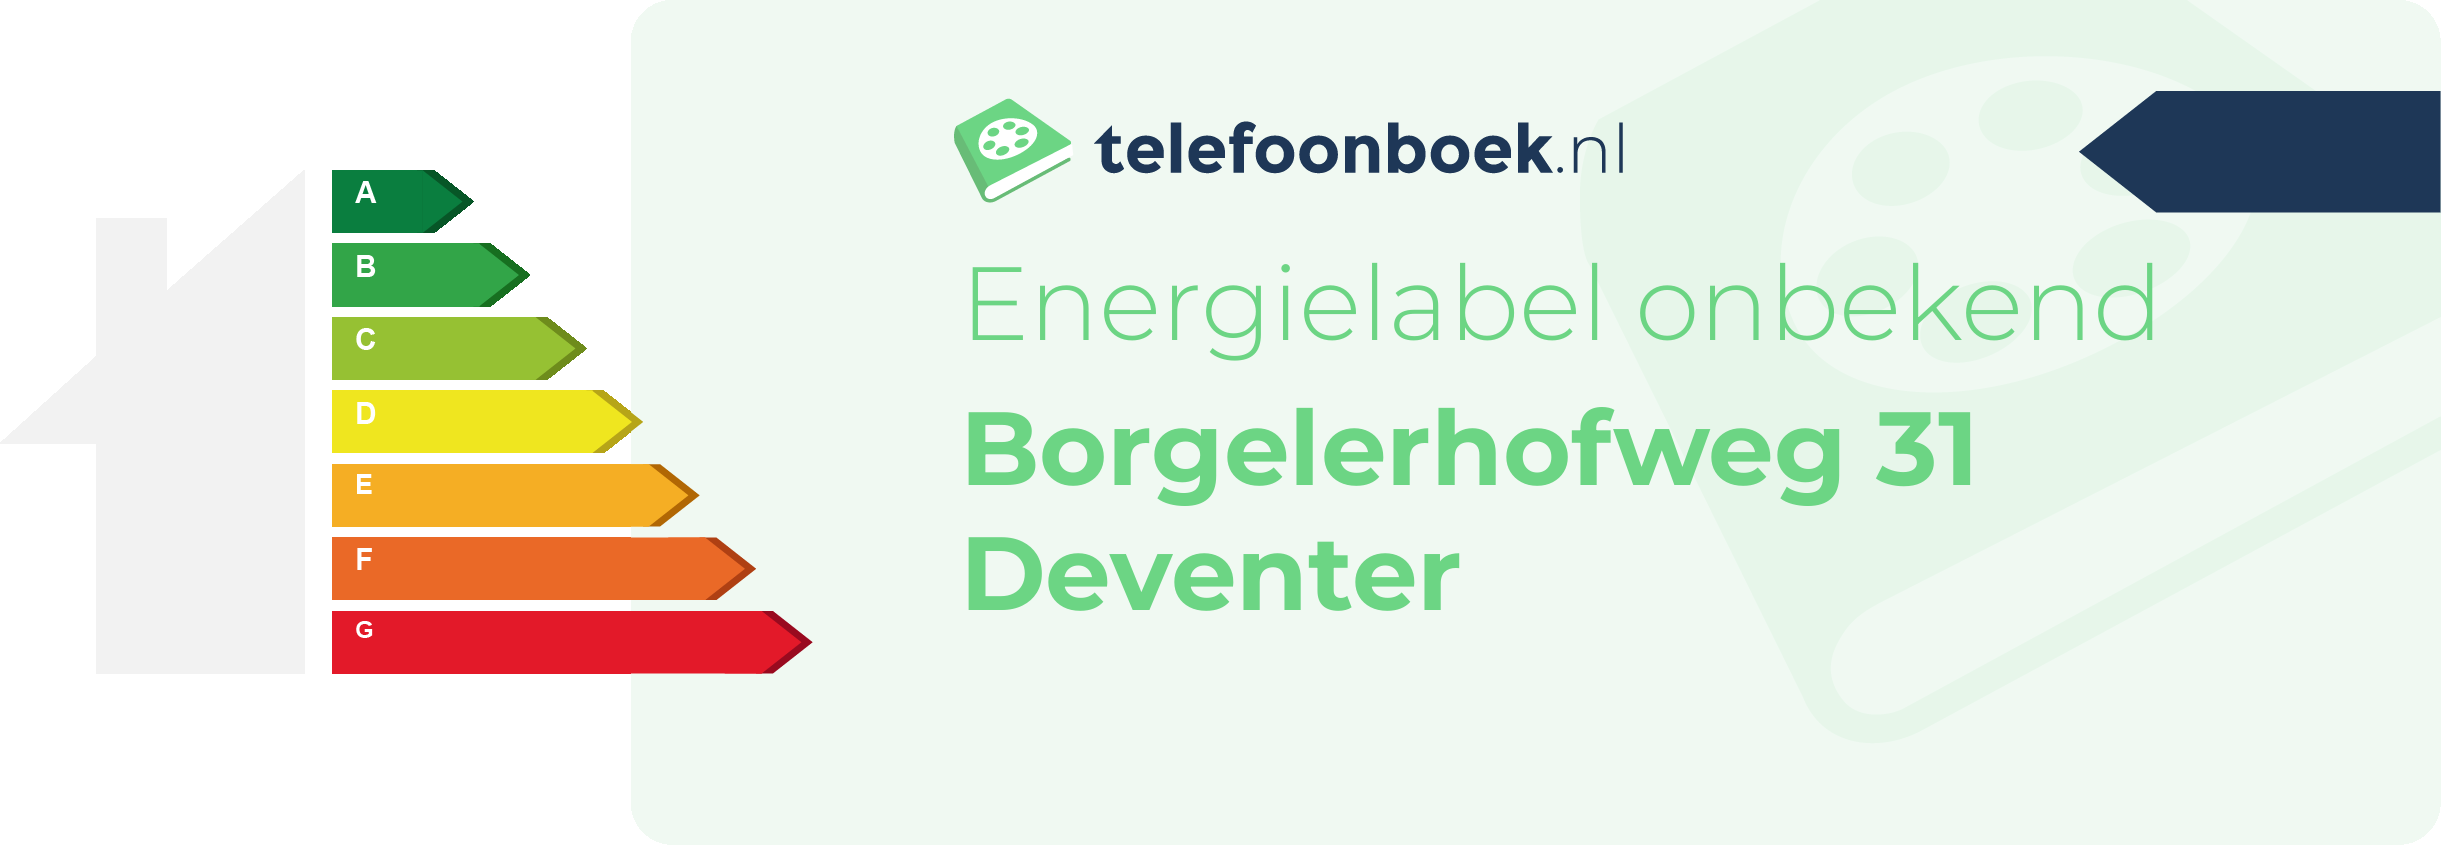 Energielabel Borgelerhofweg 31 Deventer